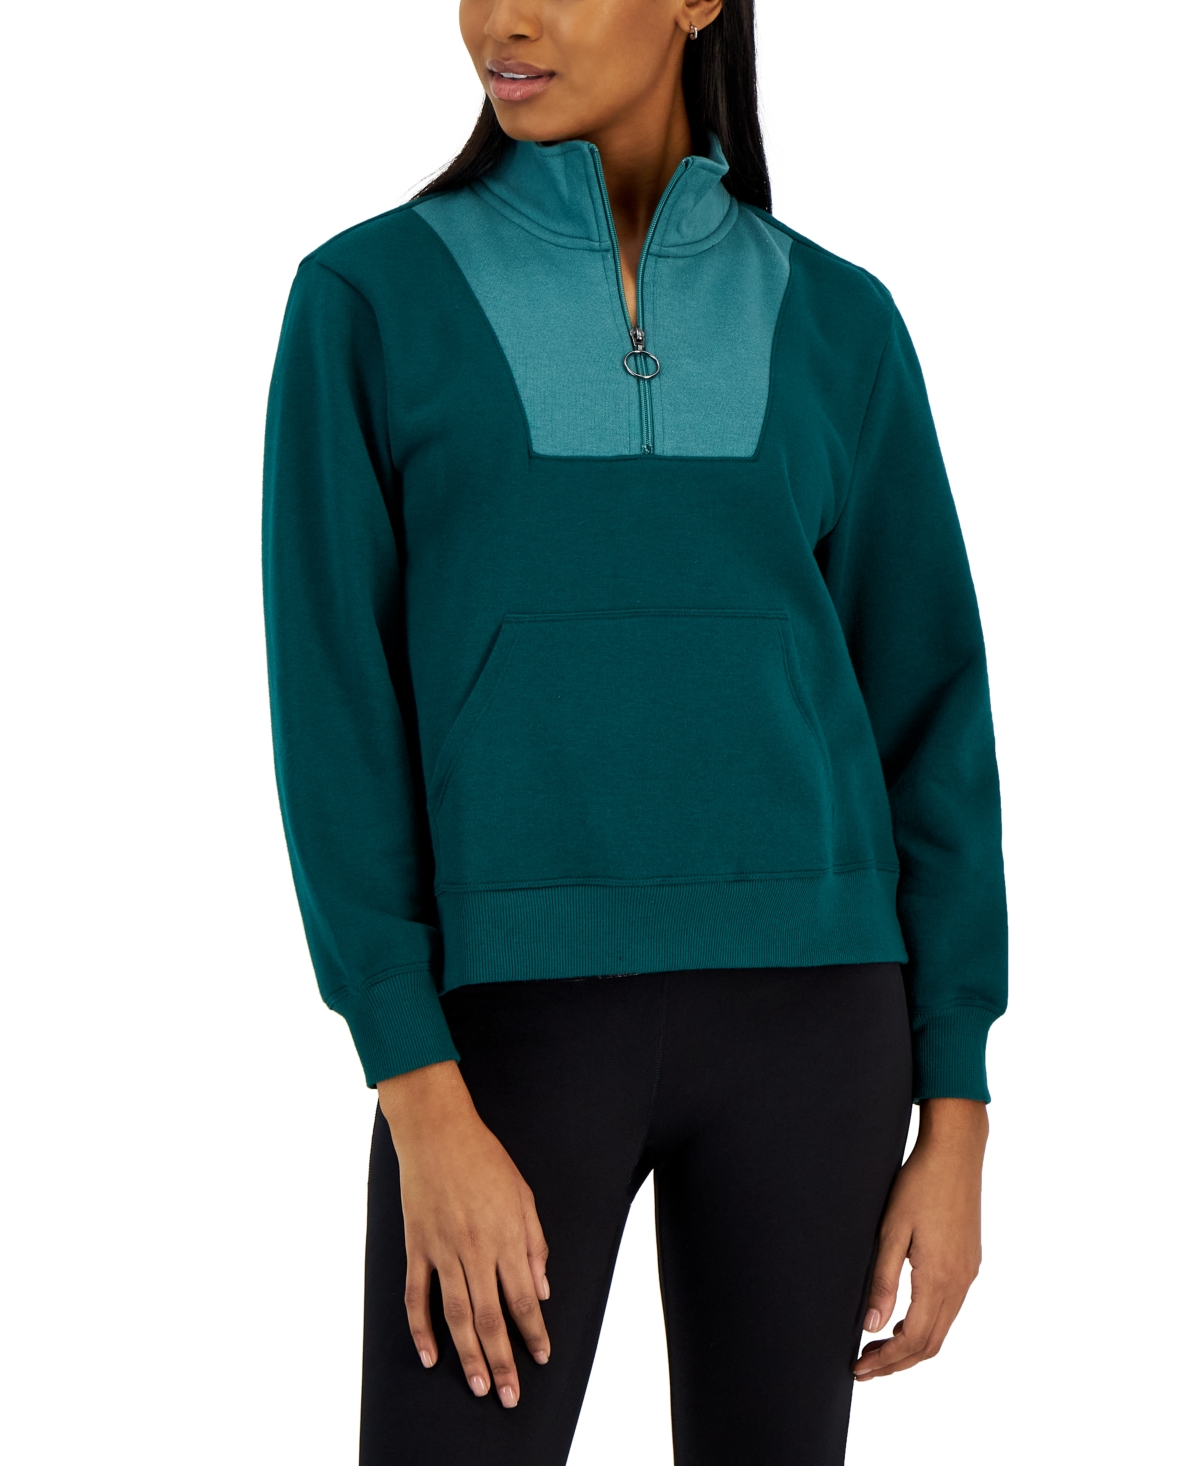  Id Ideology Petite Colorblocked Quarter-Zip Sweatshirt, Created for Macy's